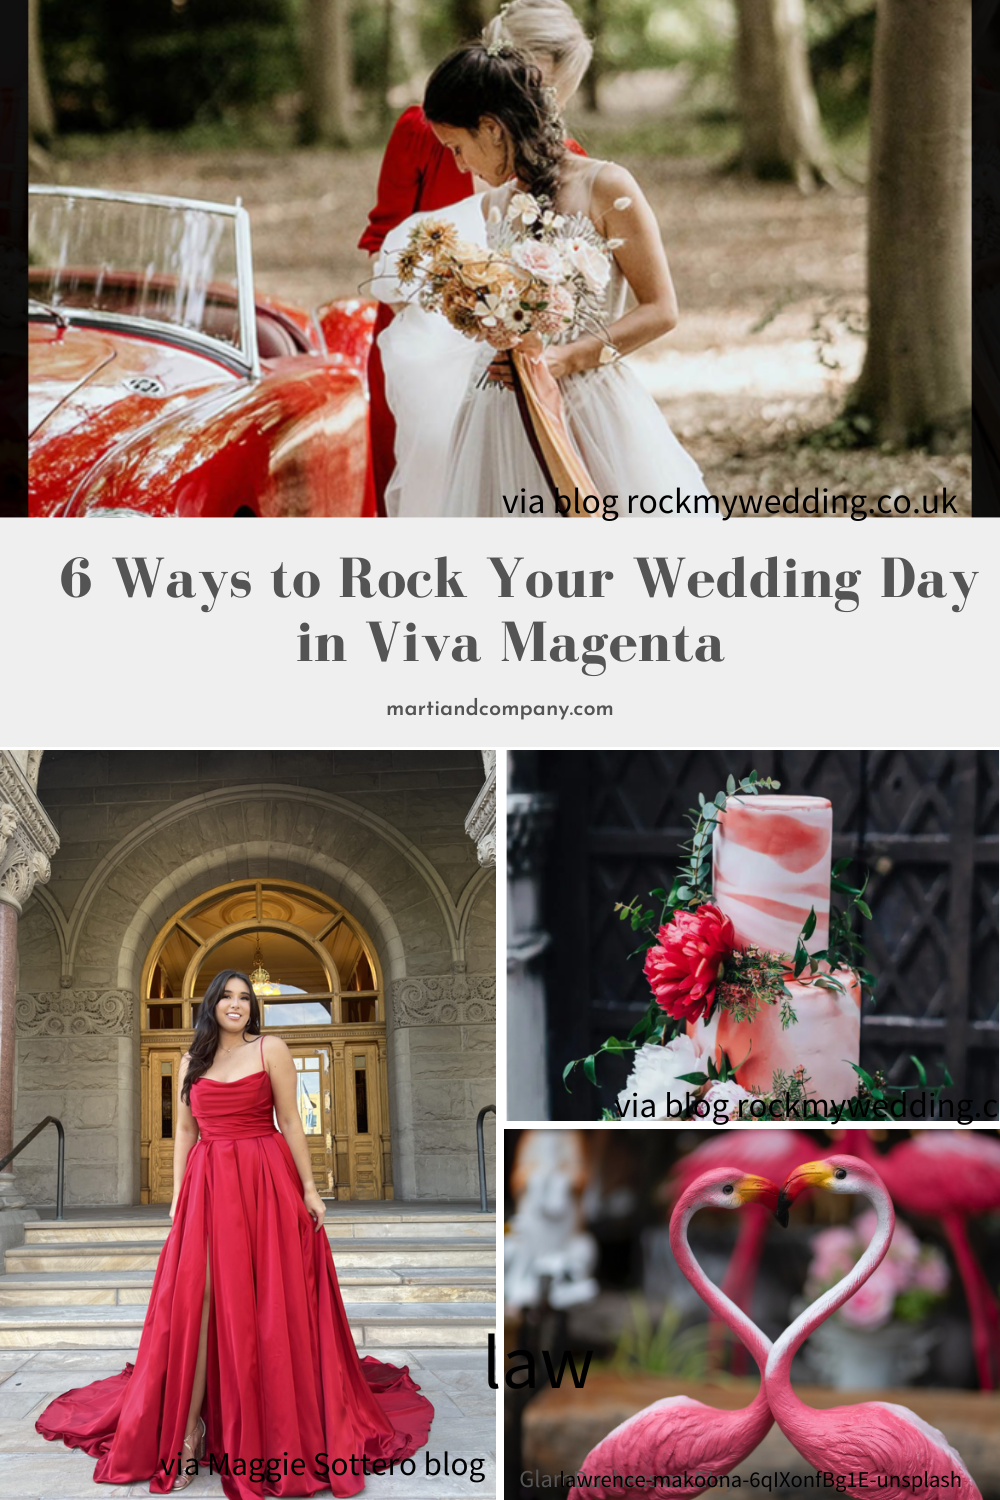 photo collage of magenta wedding dress, cake, bouquet and flamingos